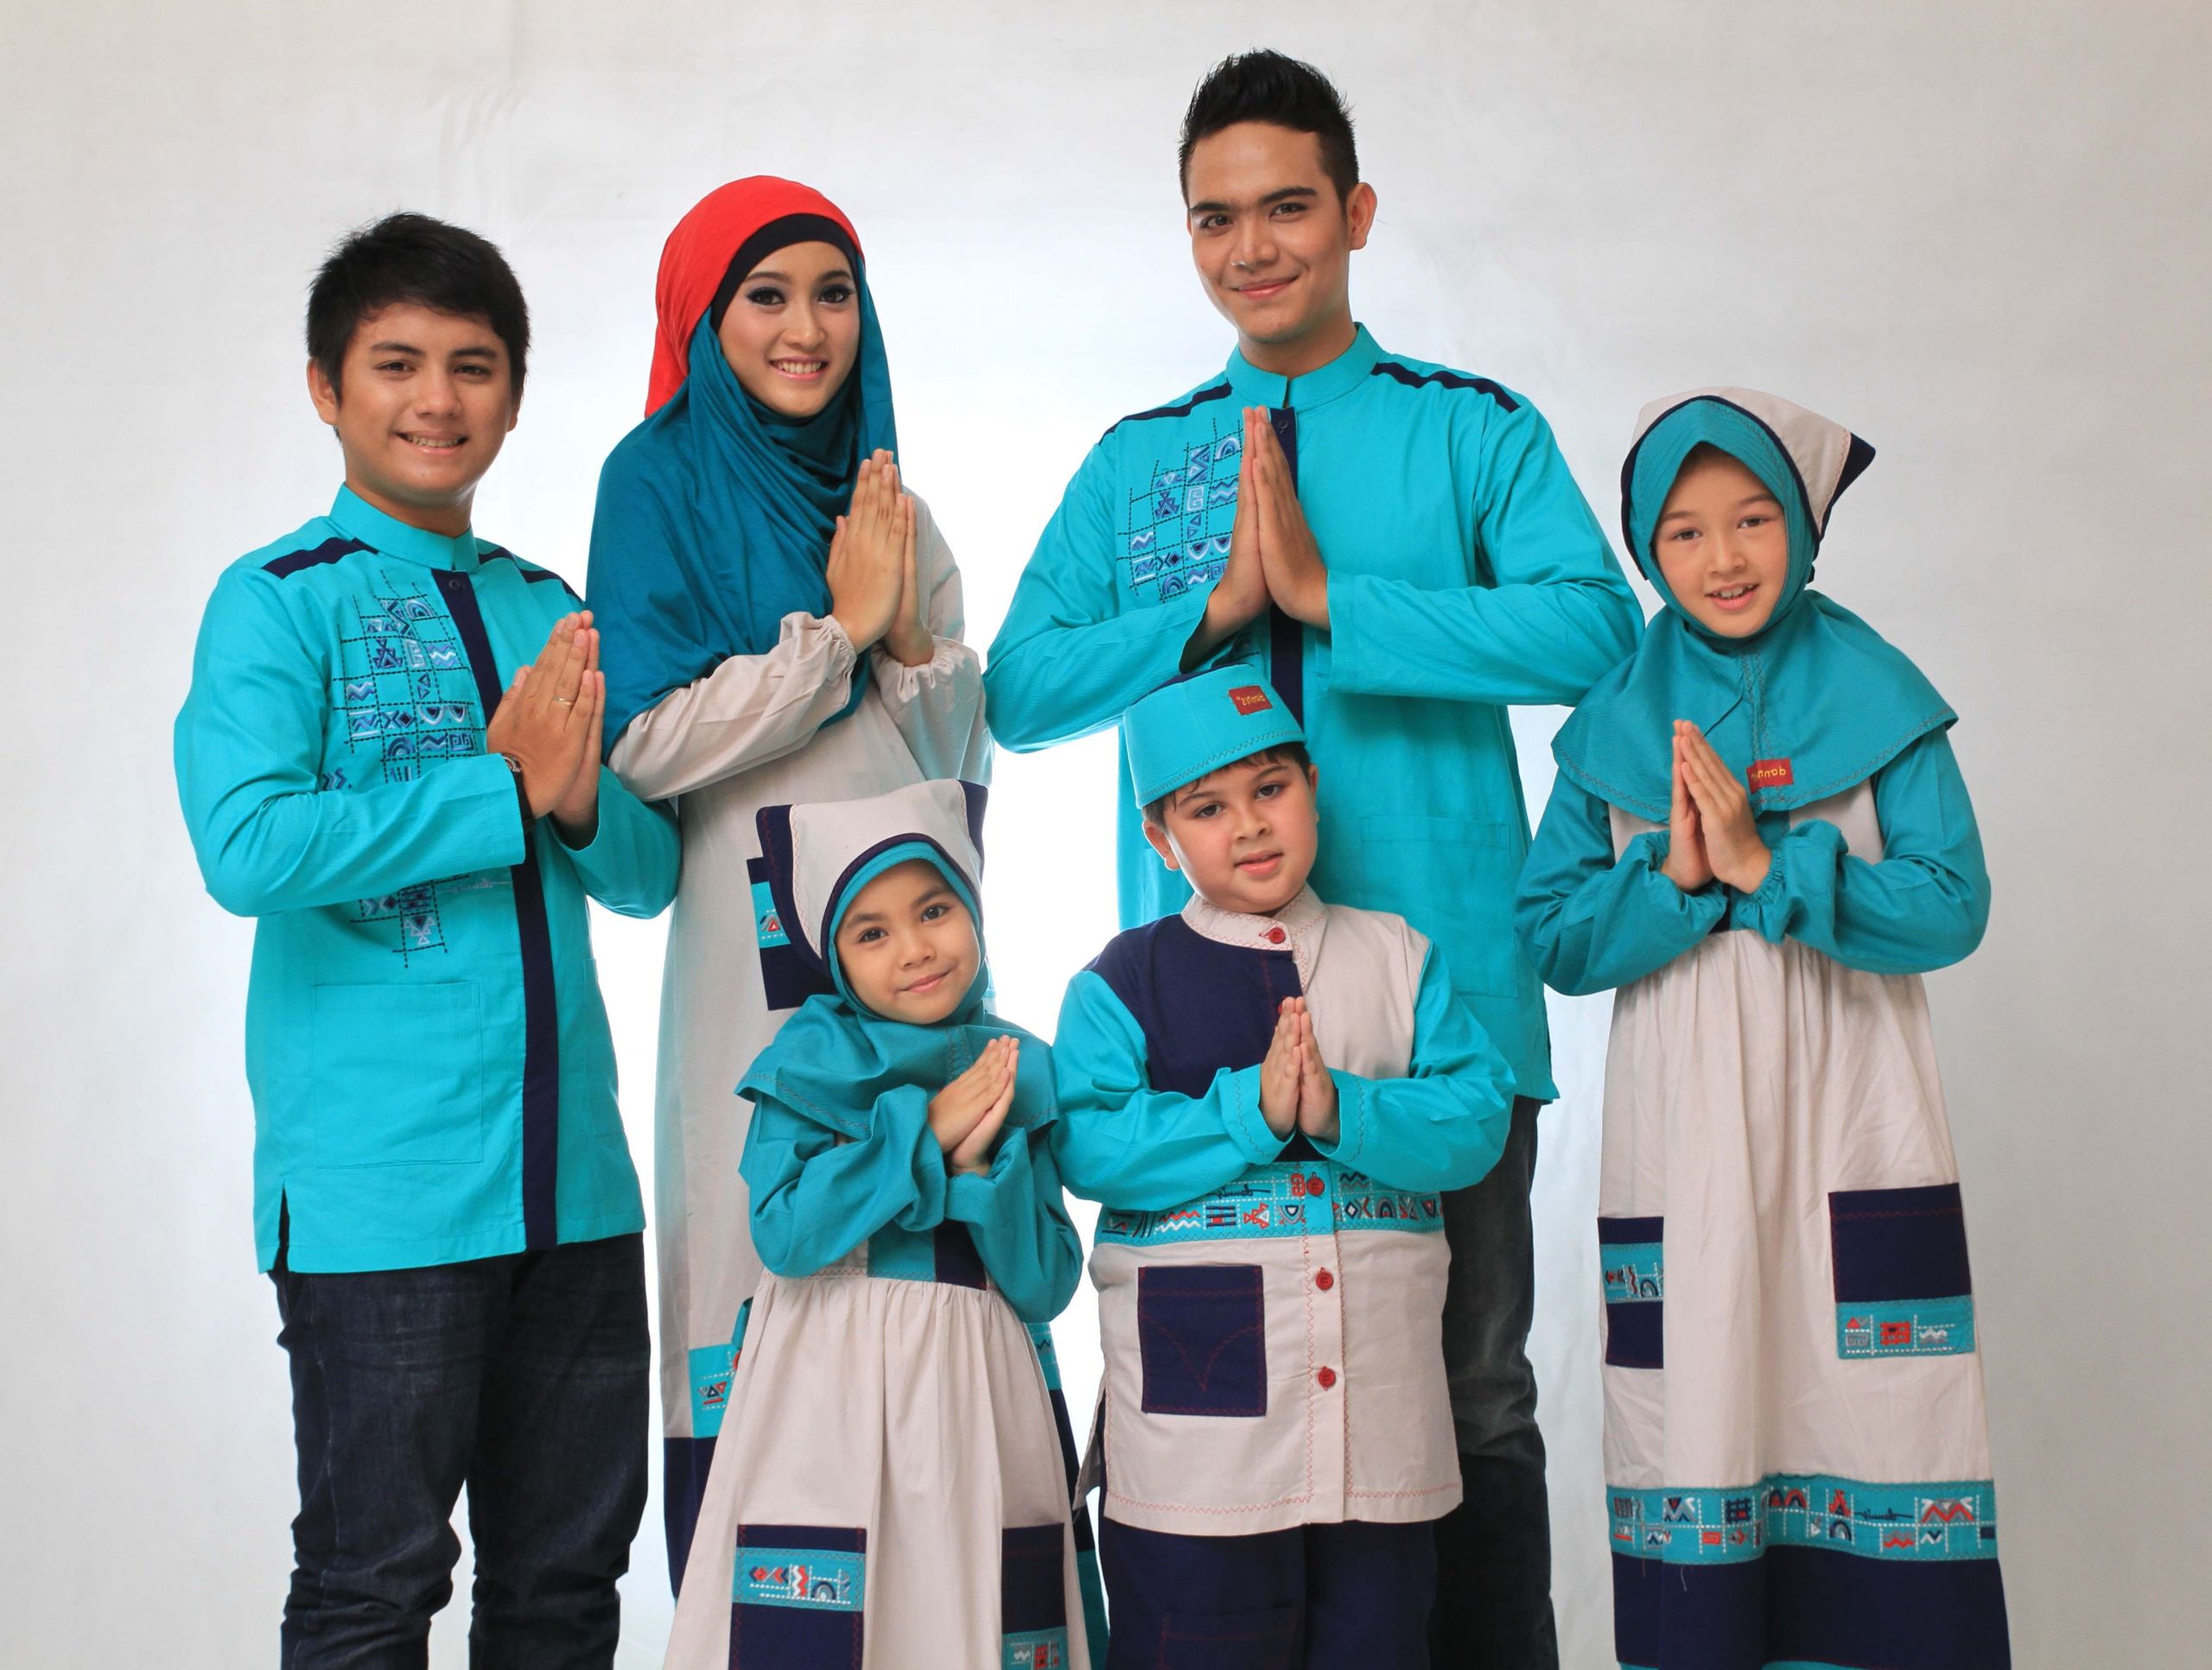 Model Inspirasi Baju Lebaran Keluarga 2019 Zwdg Baju Muslim Untuk Lebaran Berhijab